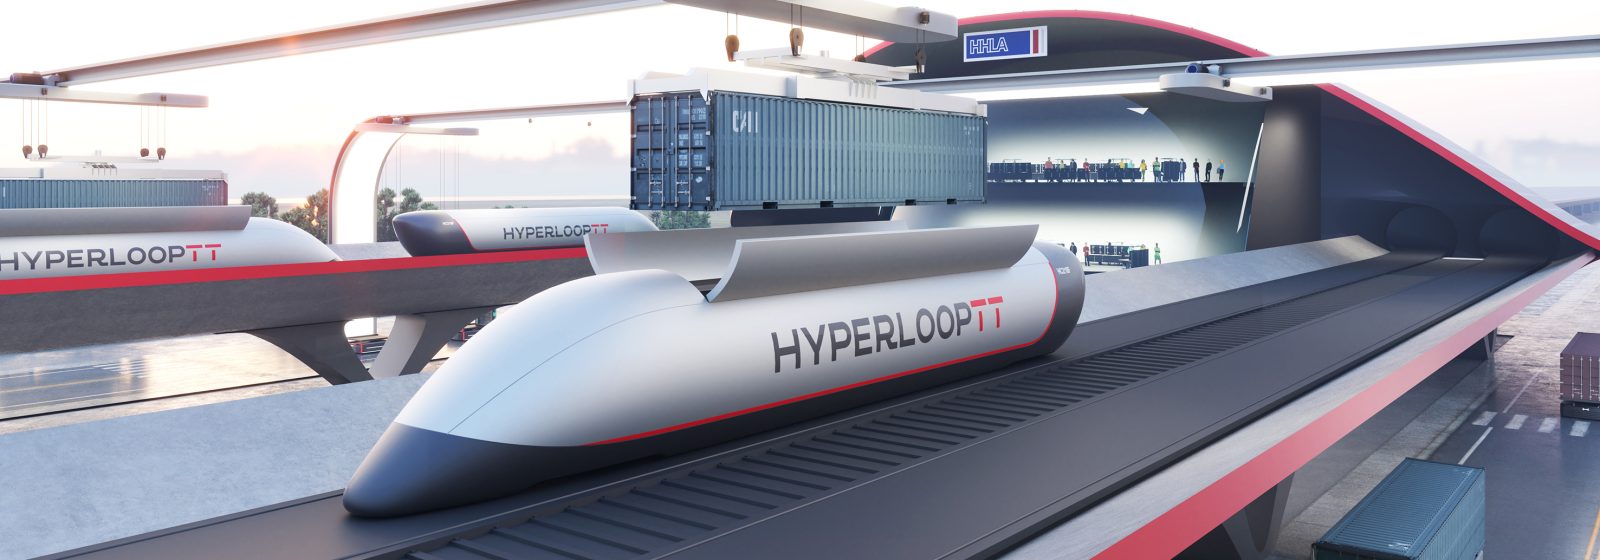 HHLA Hyperloop